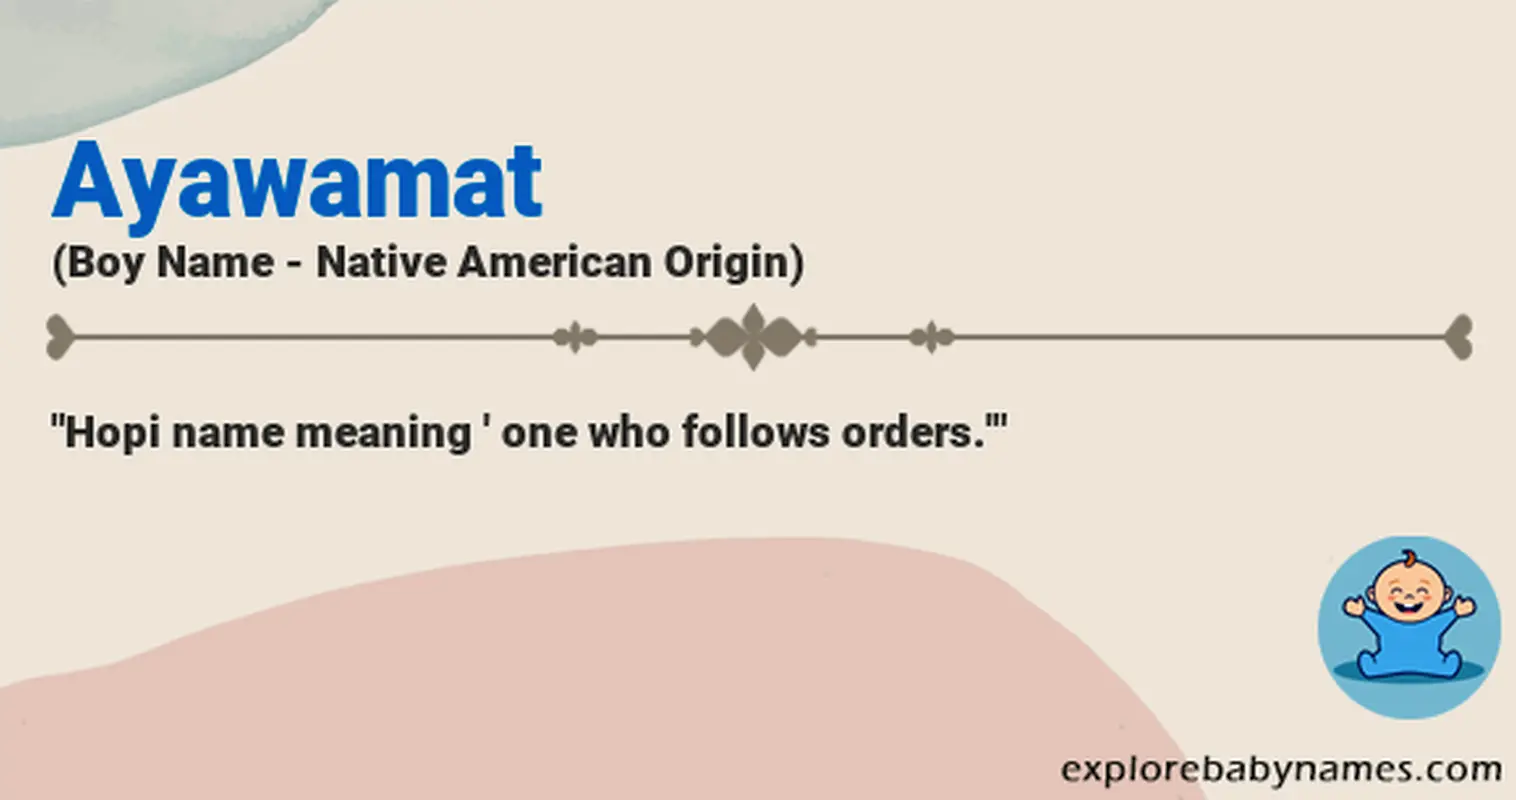 Meaning of Ayawamat